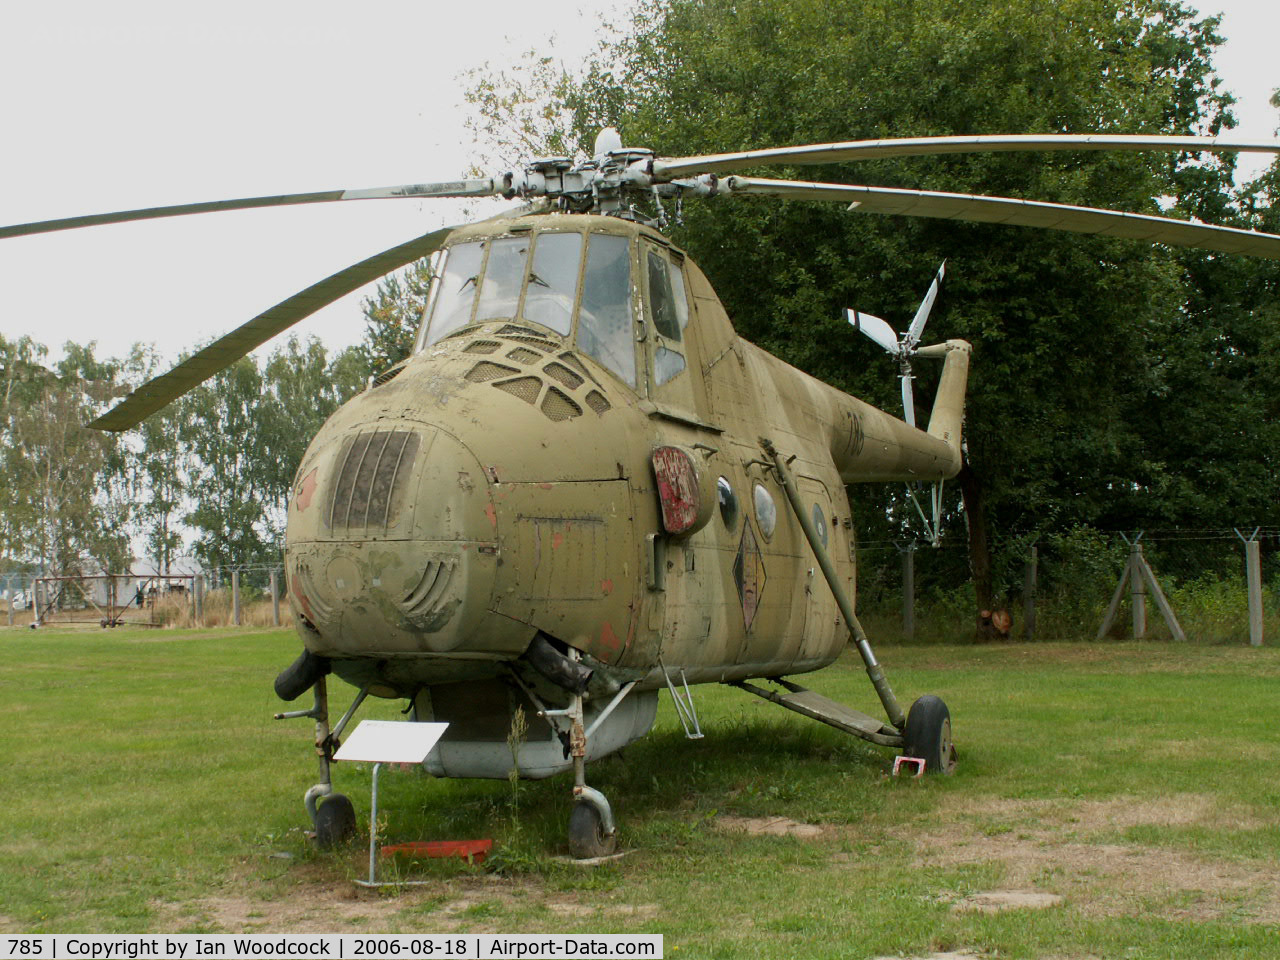 785, 1957 Mil Mi-4 C/N 02 51, Mil Mi-4A/Cottbus Museum-Brandenburg (also carries 785)